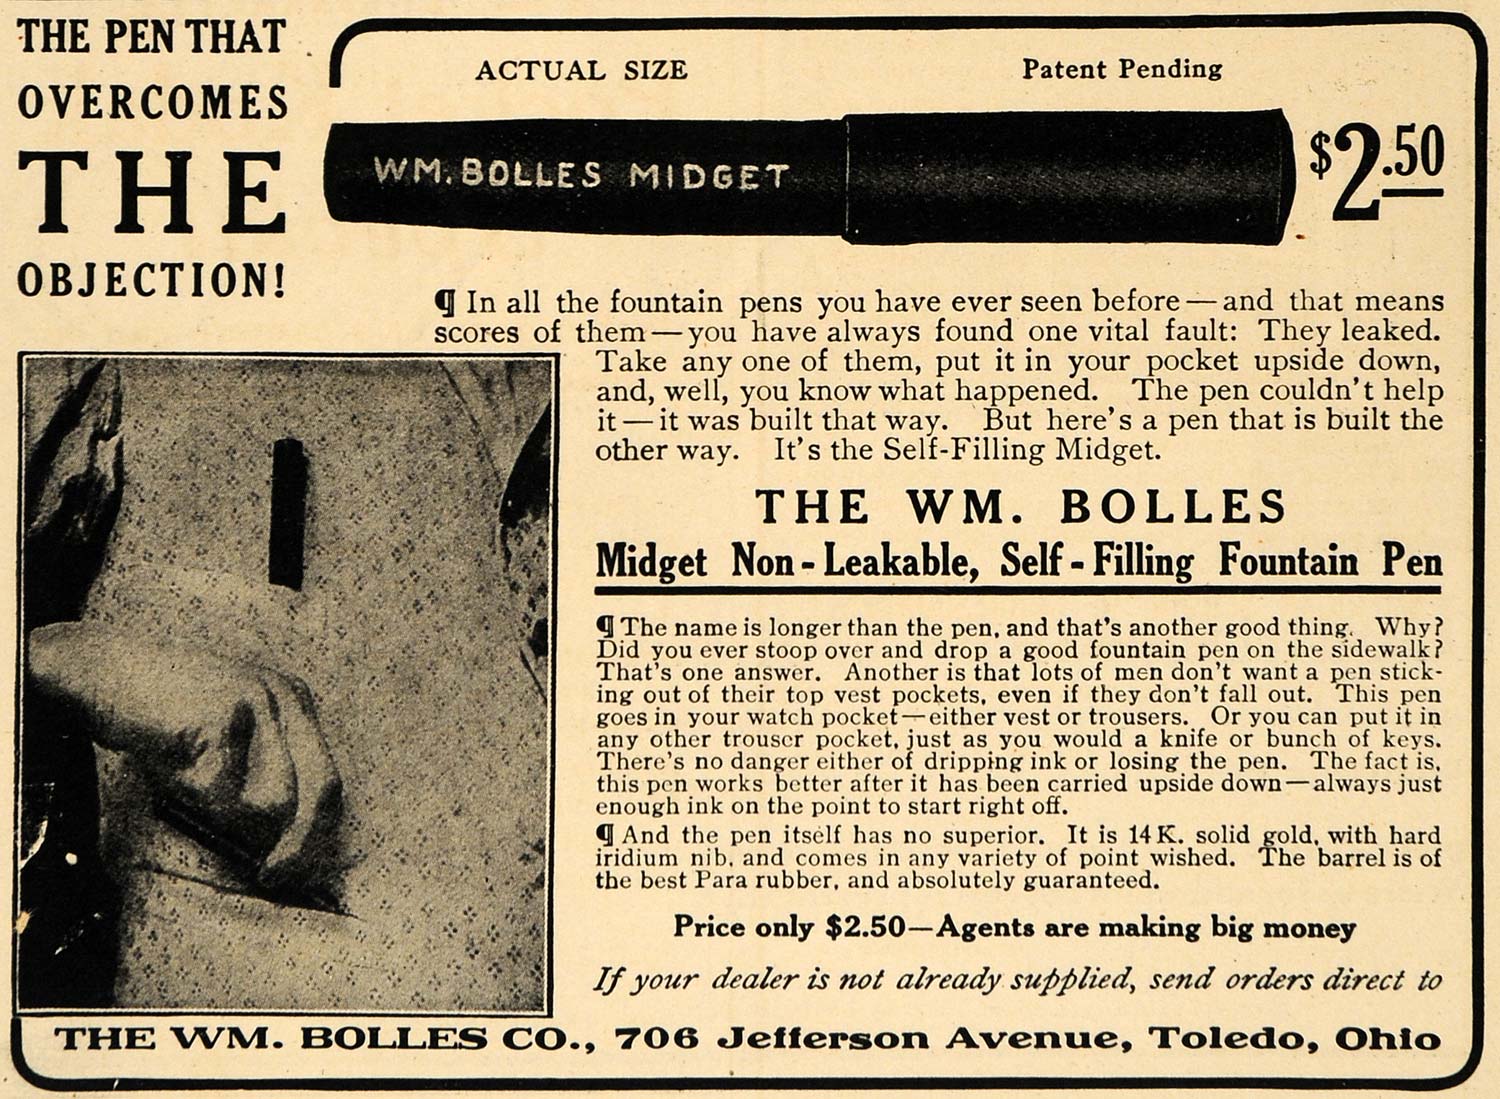 1908 Ad Wm. Bolles Midget Fountain Pen Self-Filling - ORIGINAL ADVERTISING TW1